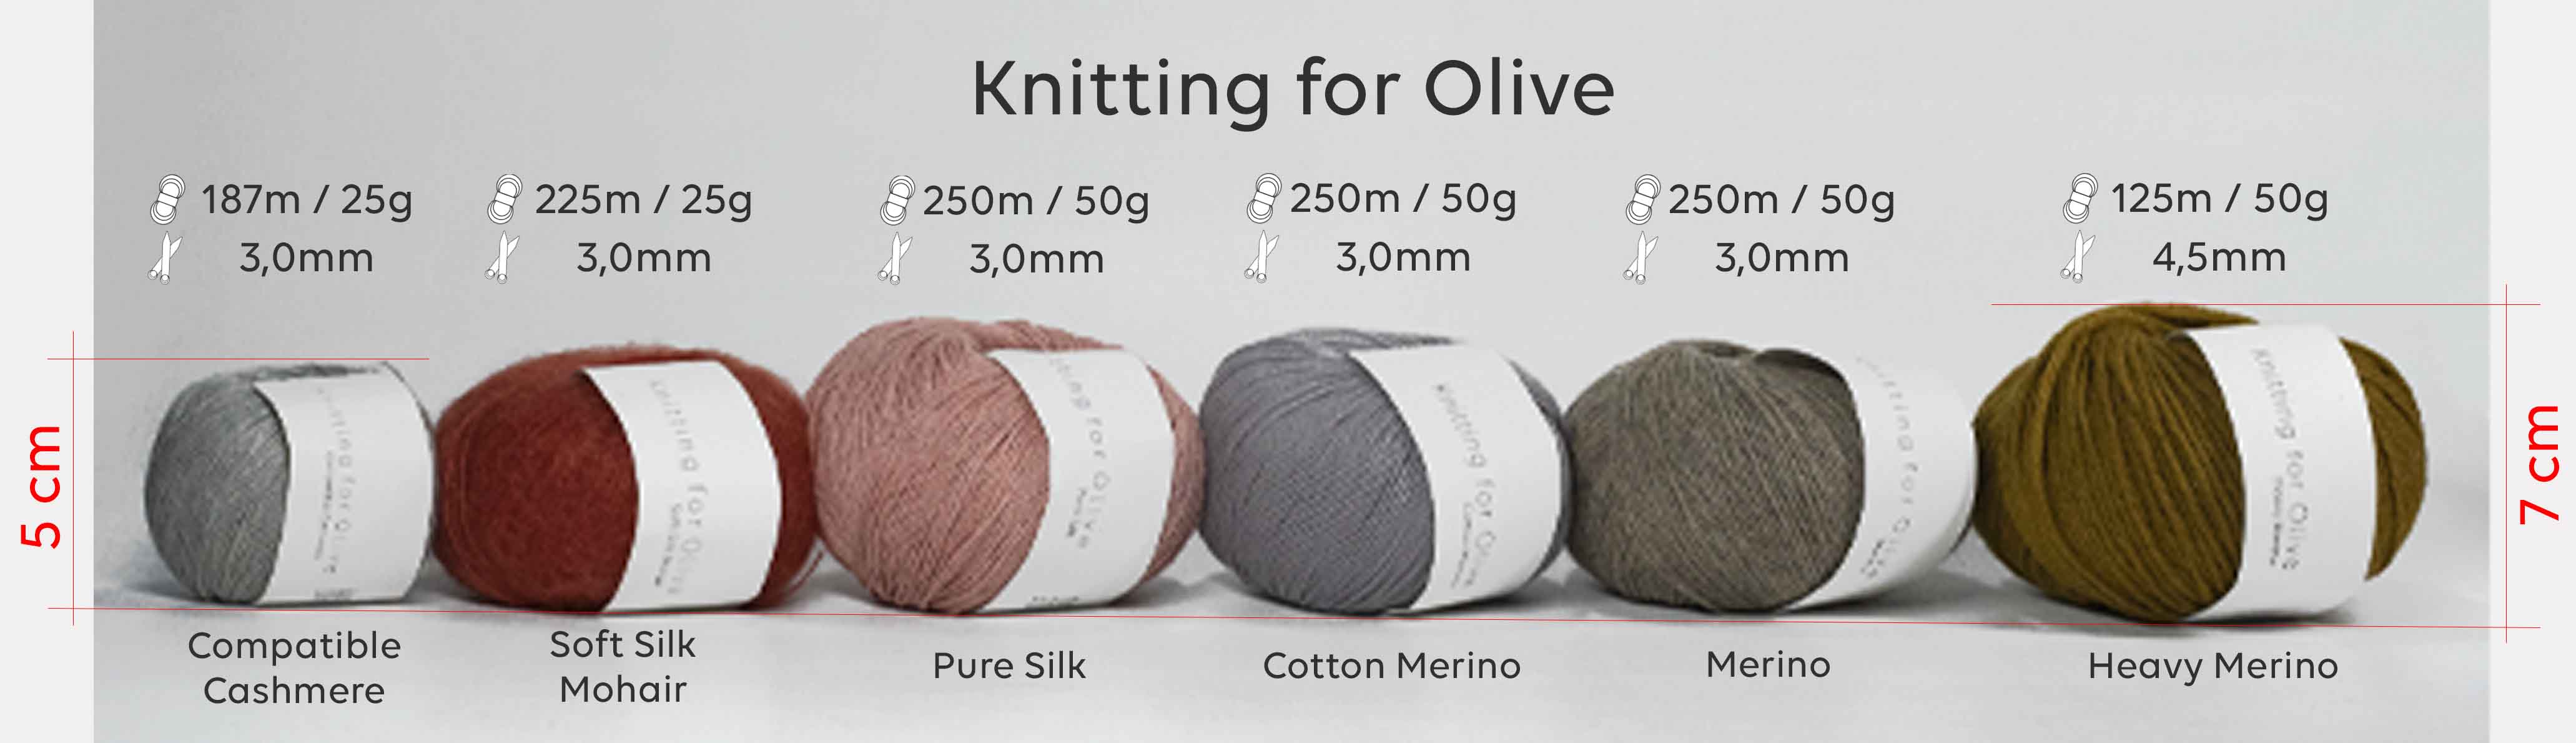 Knitting for Olive přehled